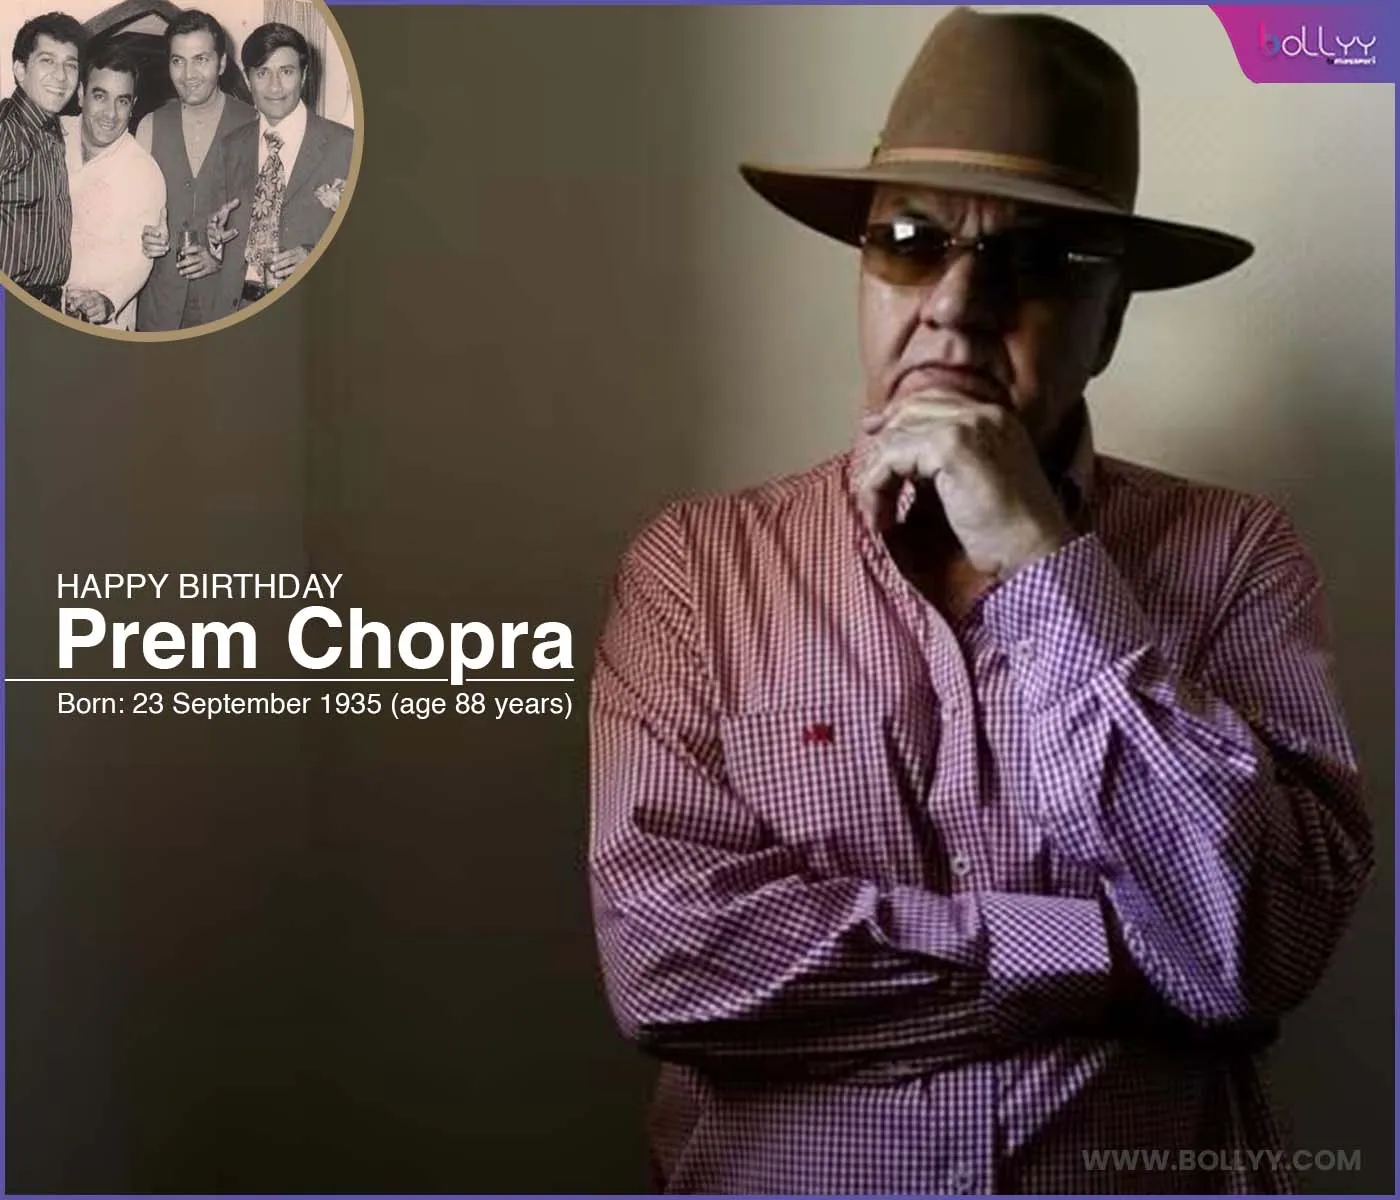 Prem chopra birthday wish (1)